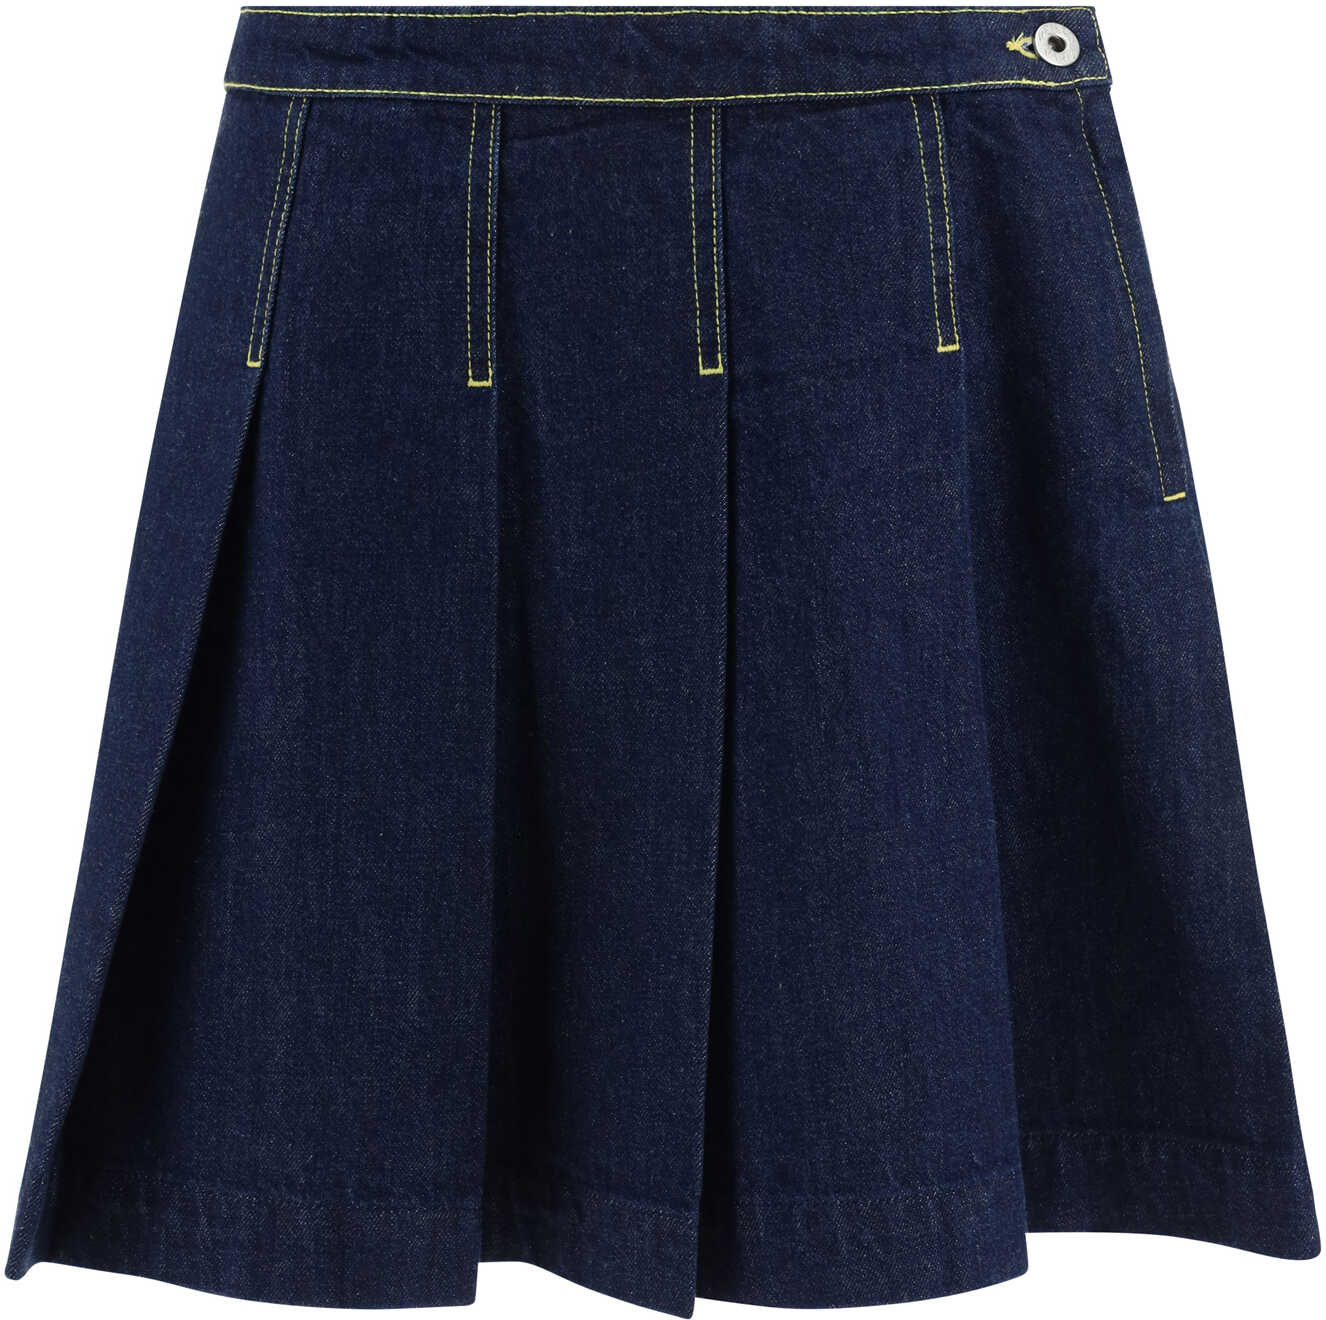 Poze Kenzo Denim Mini Skirt RINSE BLUE DENIM b-mall.ro 